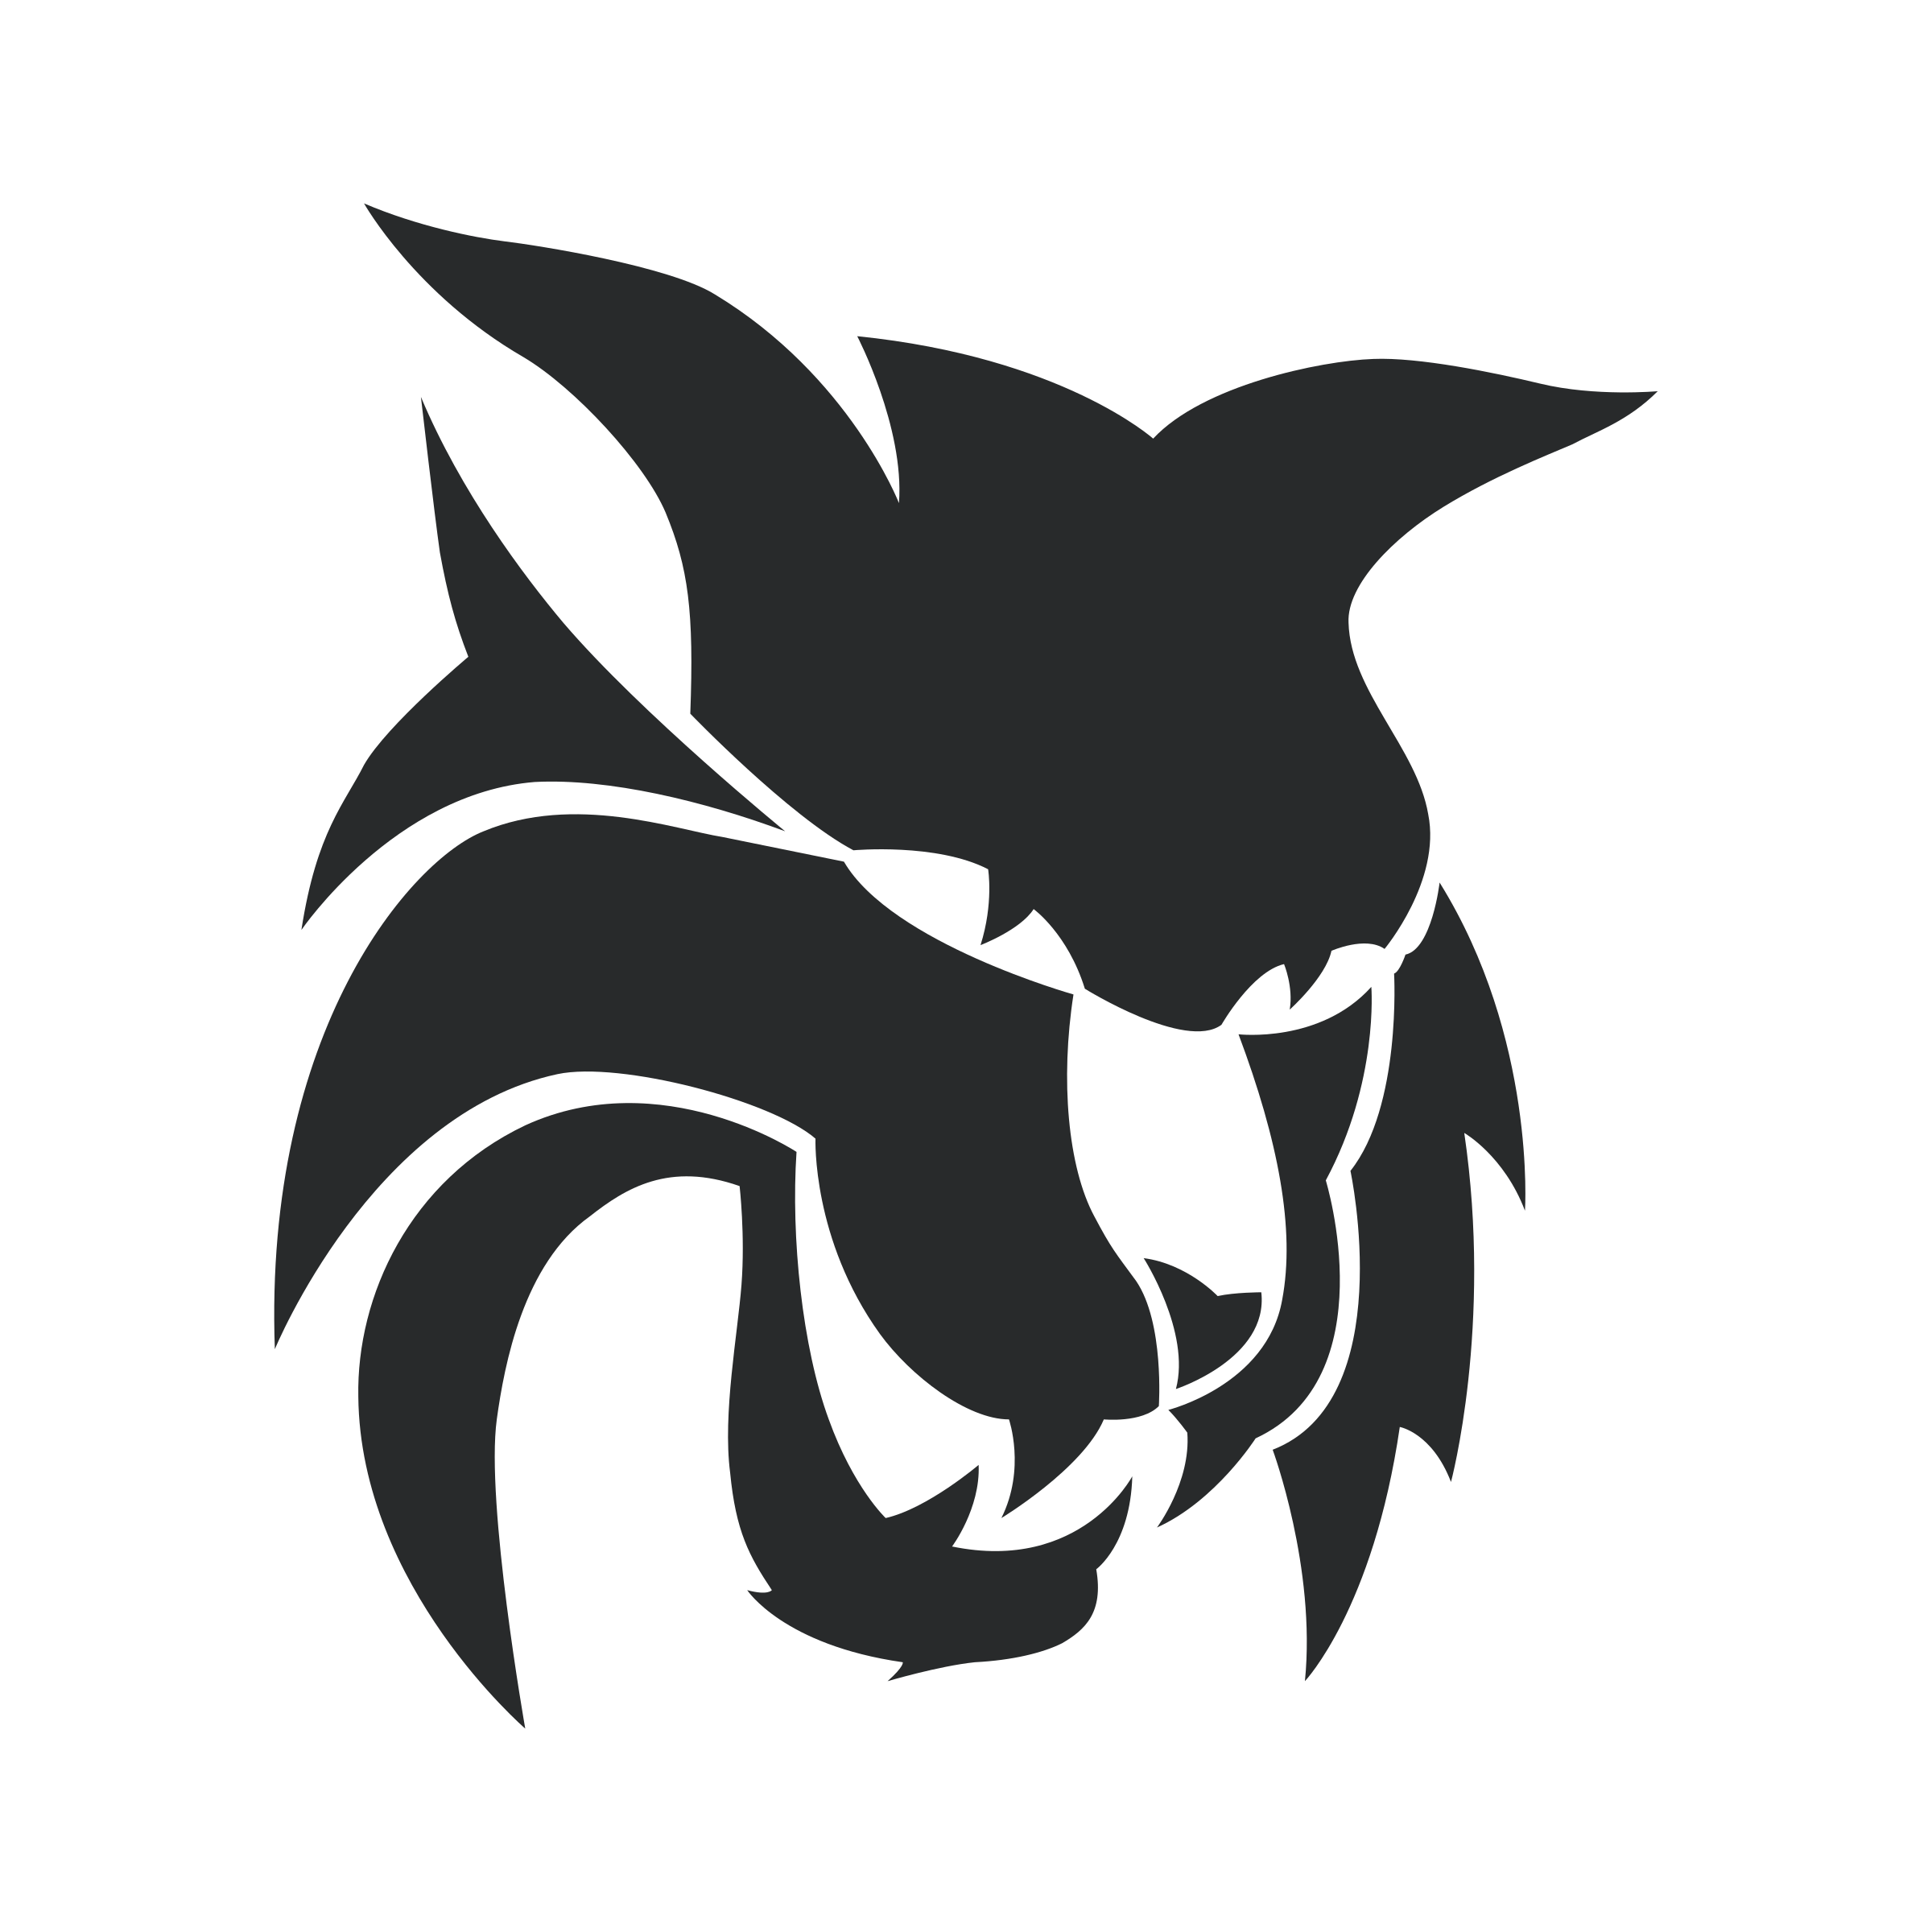 Wildcat clipart svg. Cwu logo png transparent